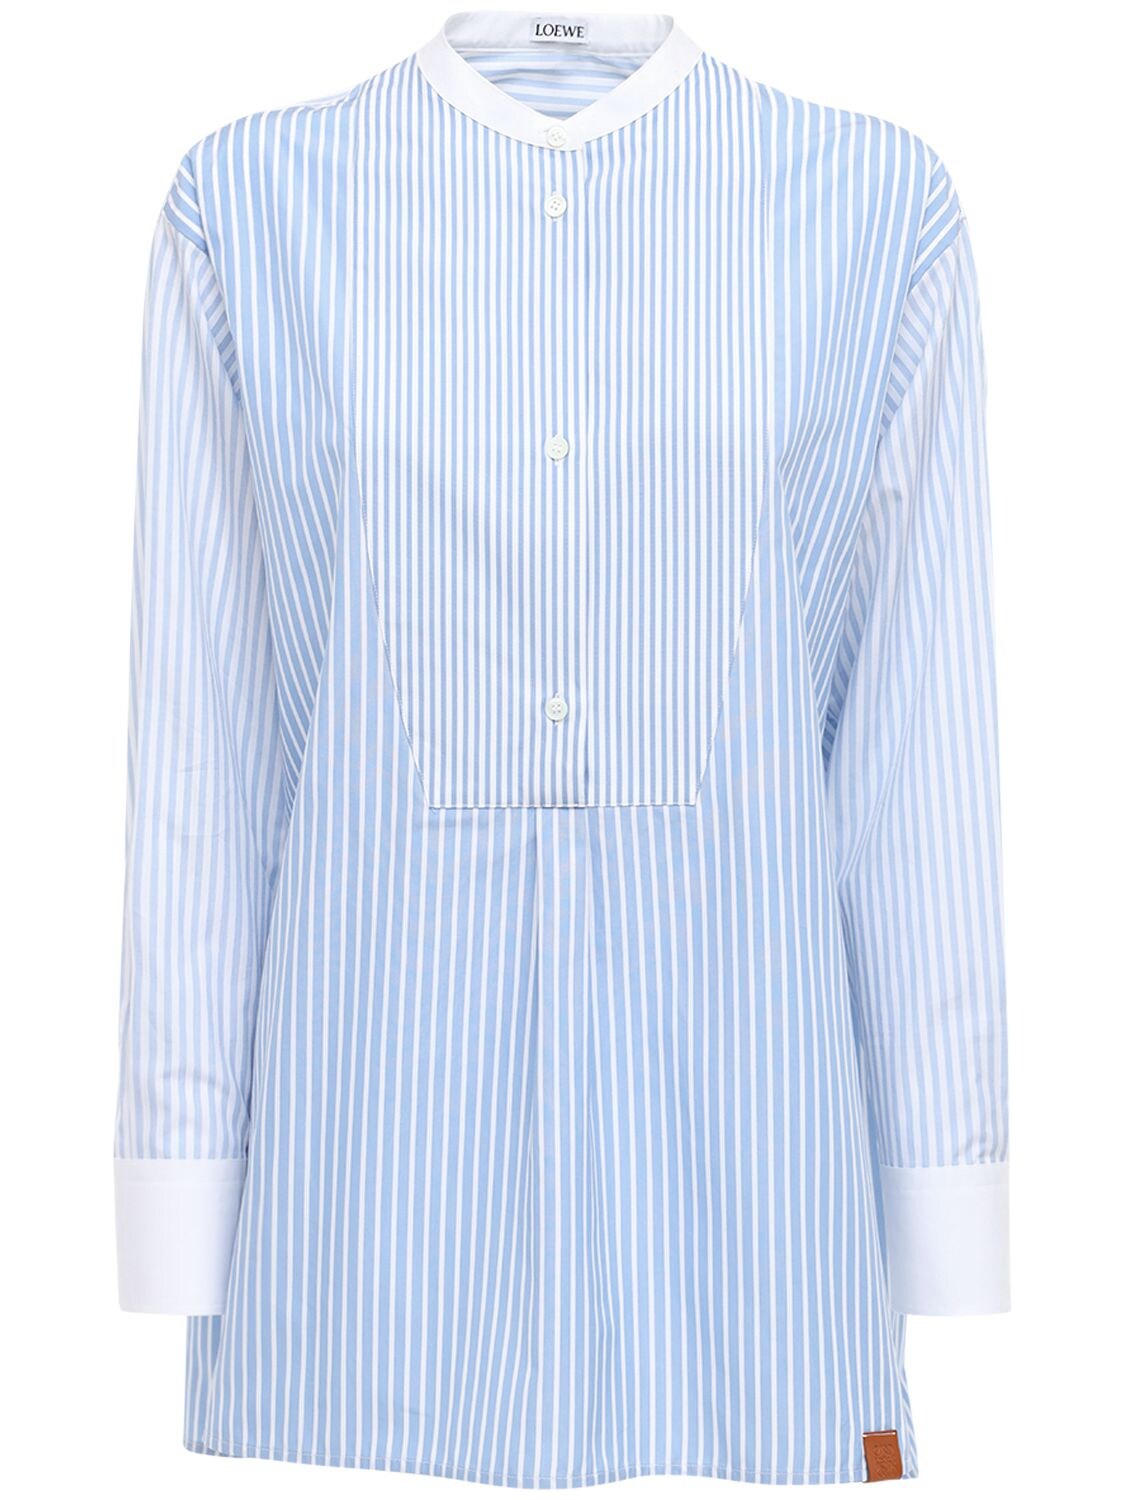 Loewe Oversize Striped Cotton Tunic Shirt In Light Blue